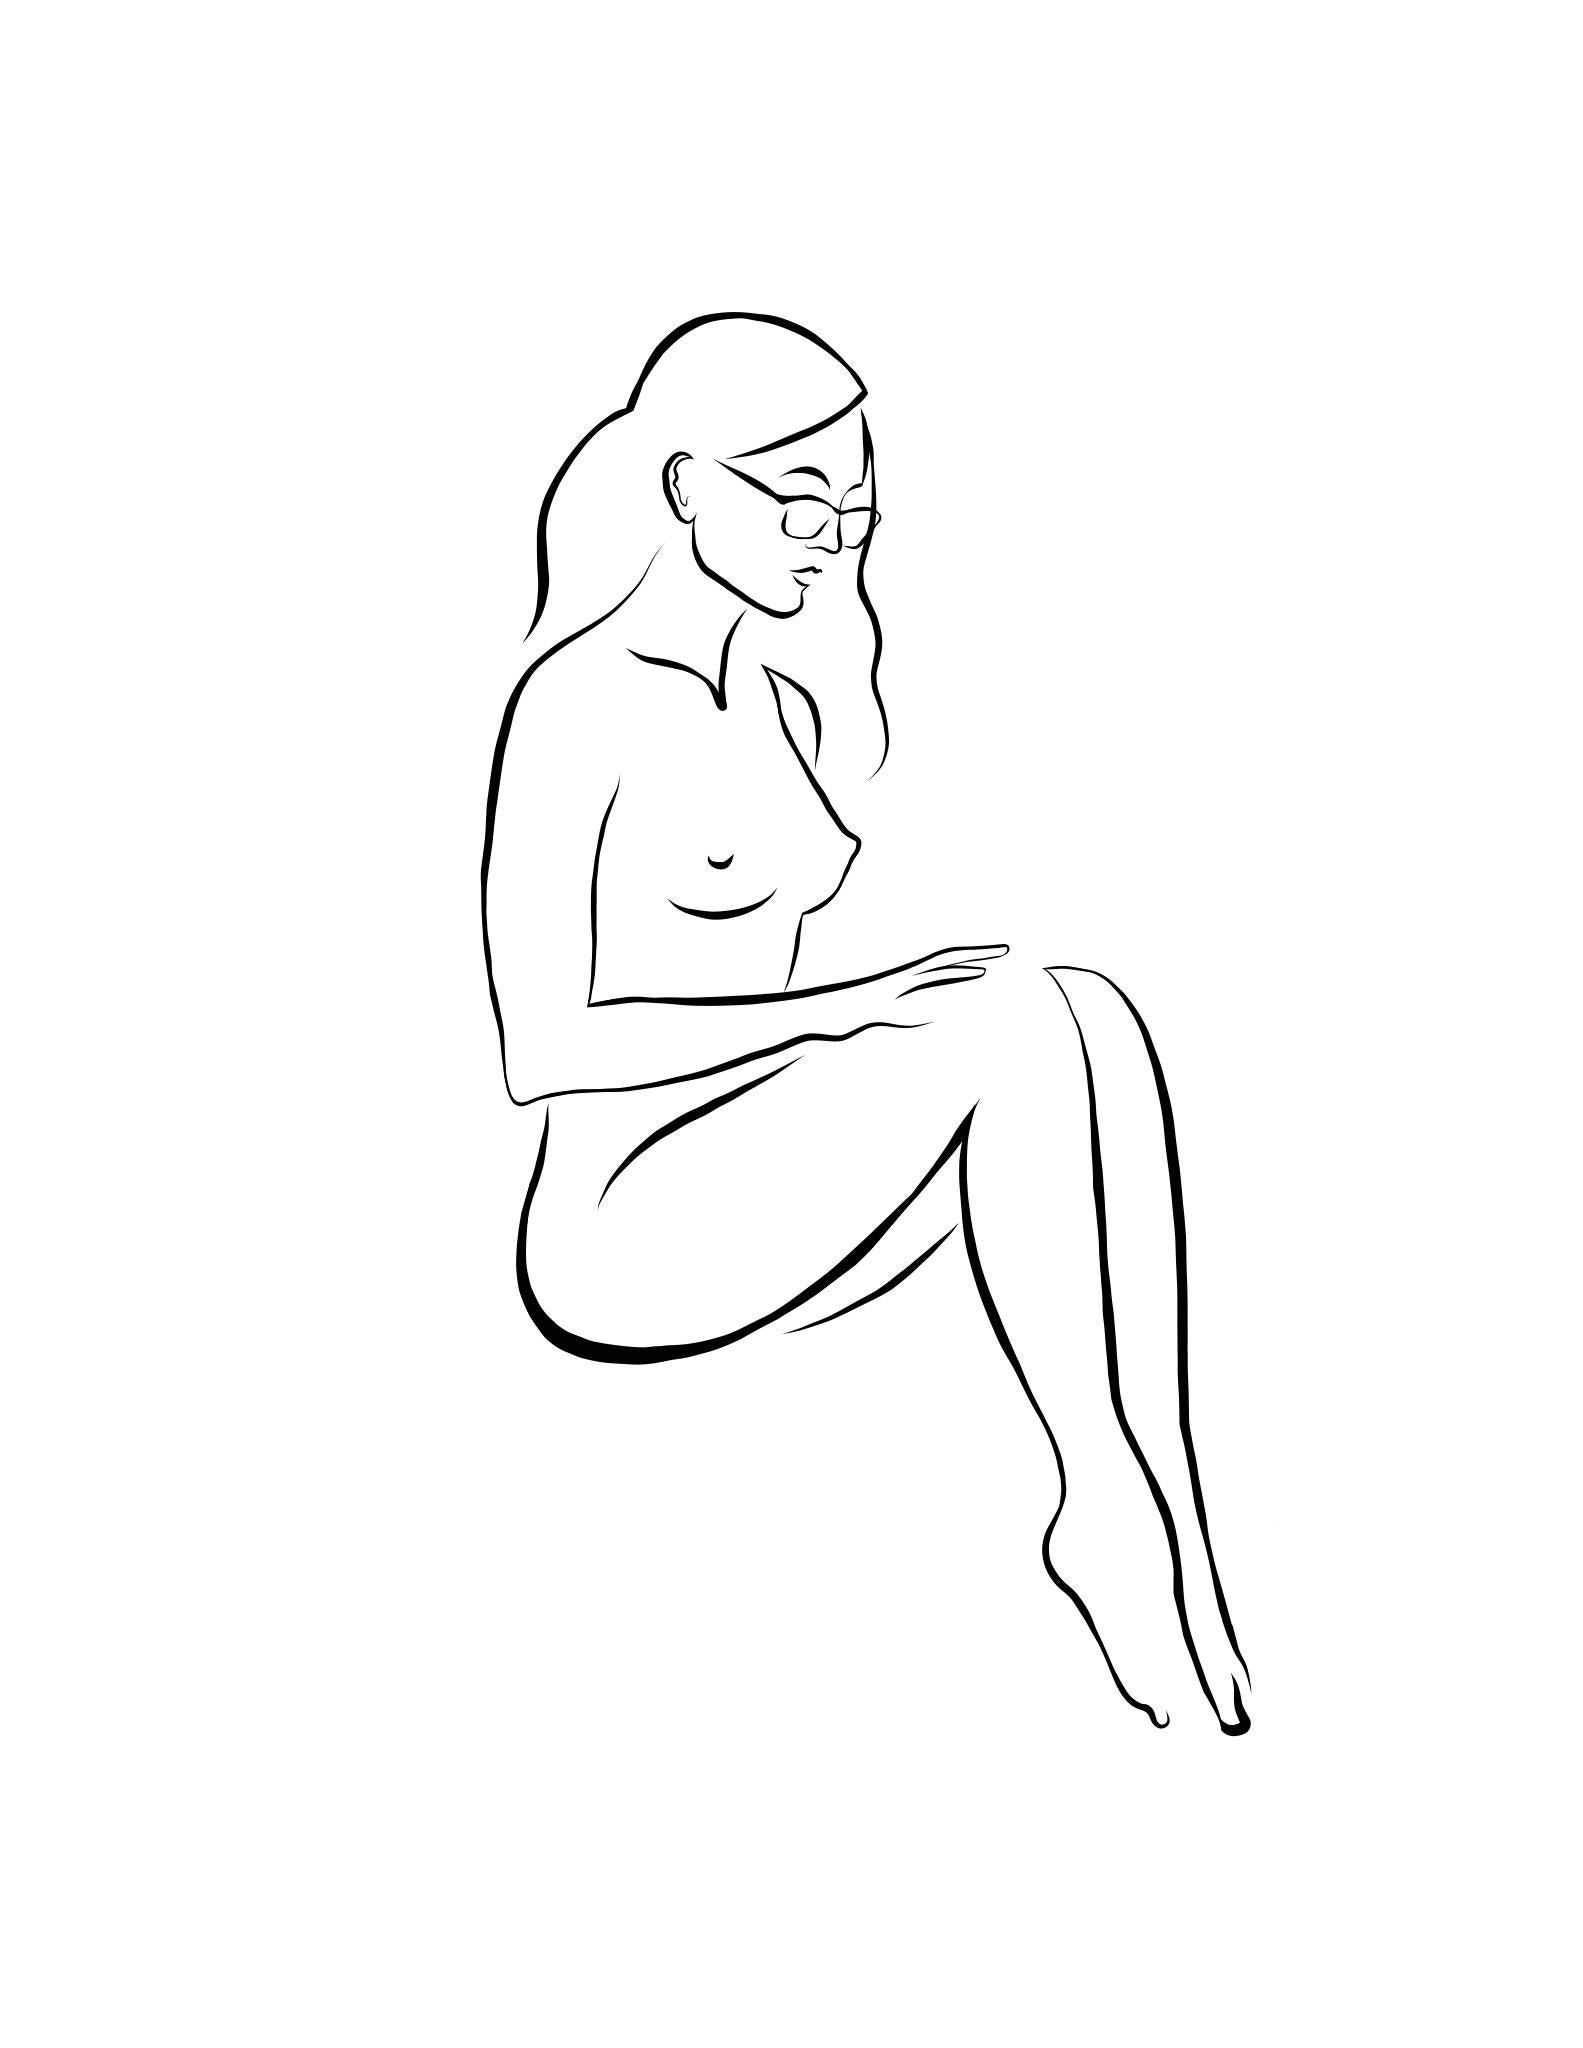 Haiku #52, 1/50 - Digital Vector Drawing Seated Female Nude Woman Figure Glasses